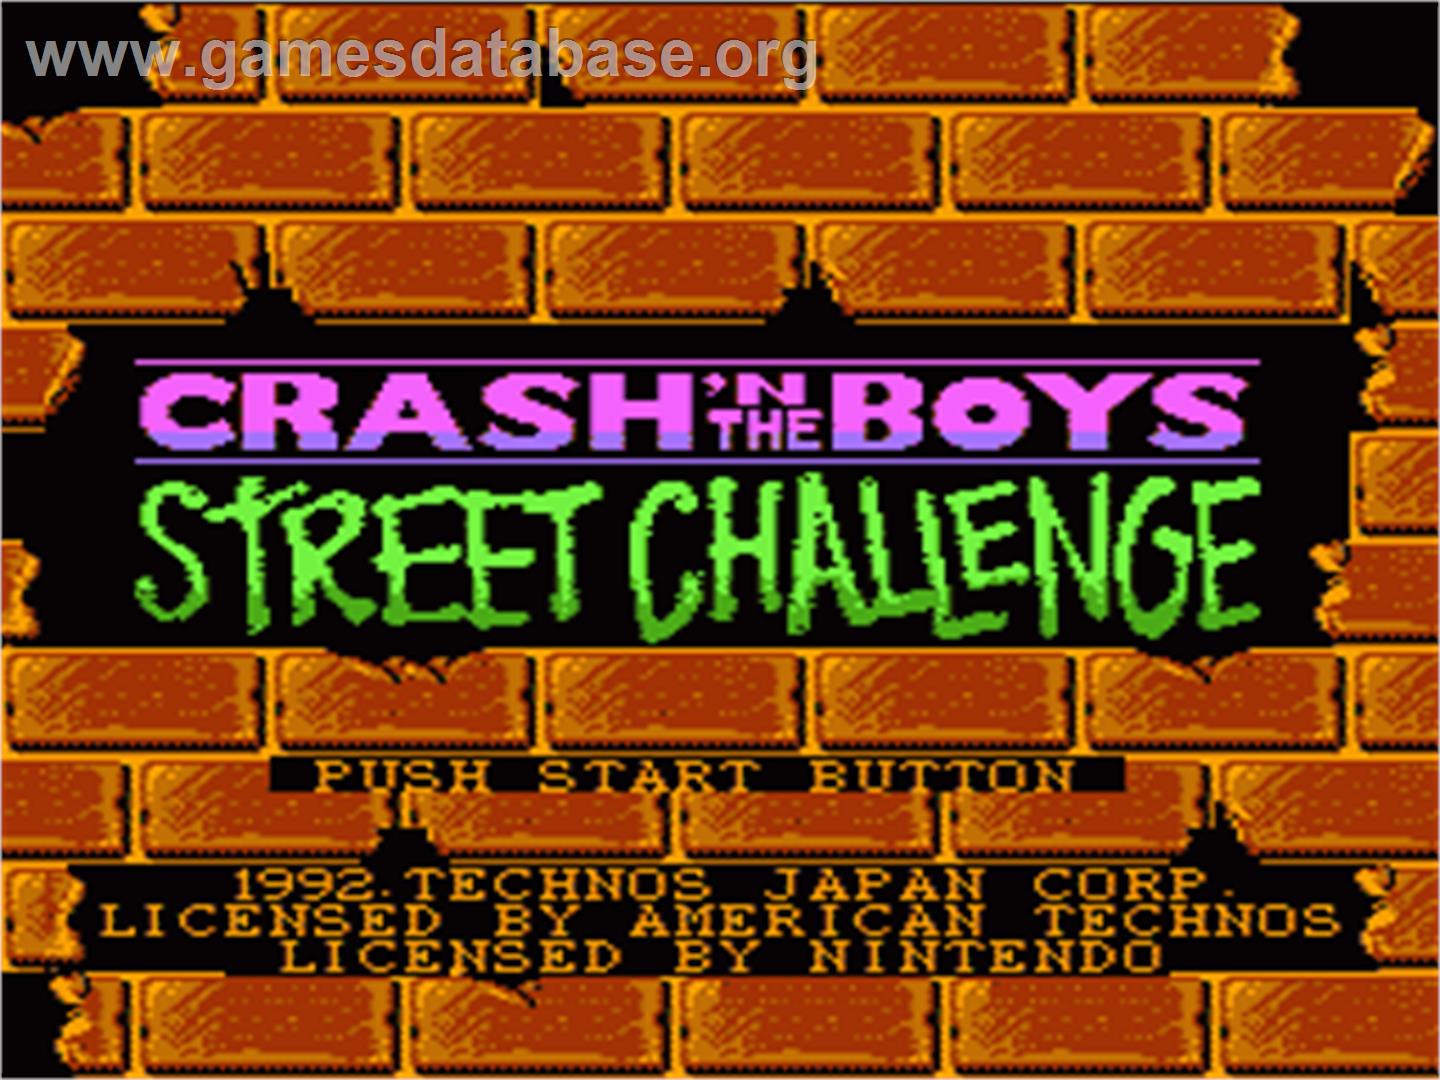 Crash 'N the Boys: Street Challenge - Nintendo NES - Artwork - Title Screen